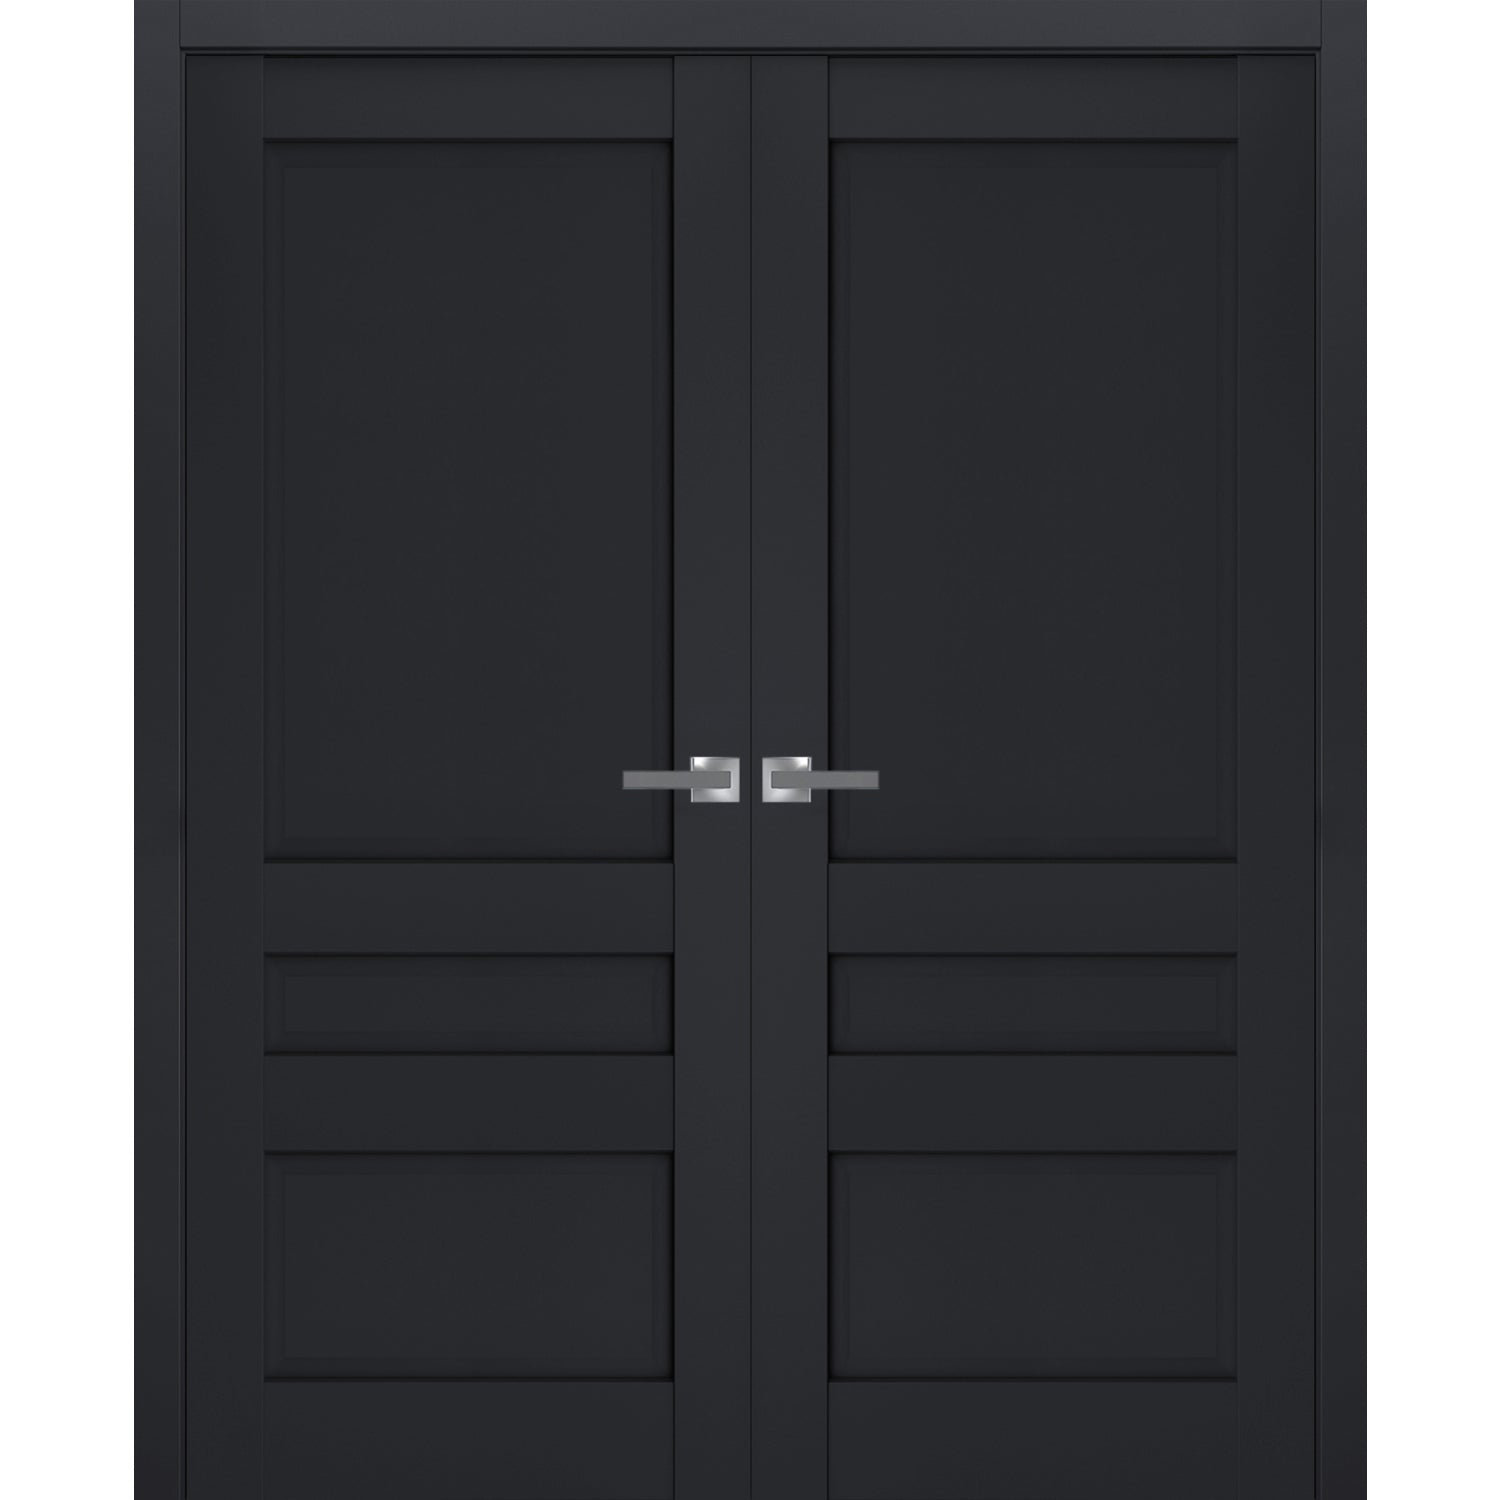 SARTODOORS Veregio Paneled Wood French Doors | Wayfair